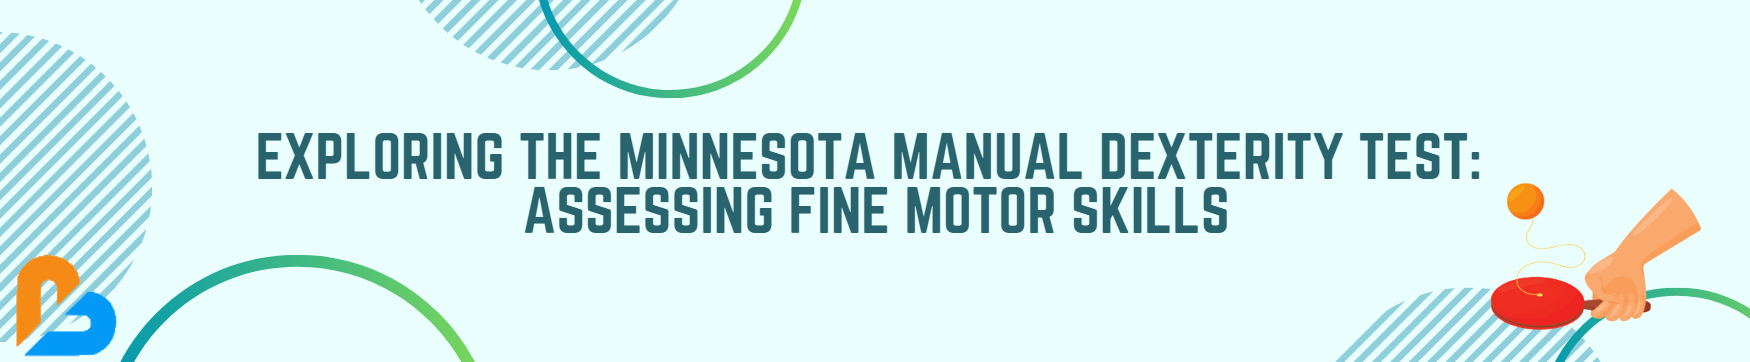 Exploring the Minnesota Manual Dexterity Test: Assessing Fine Motor Skills